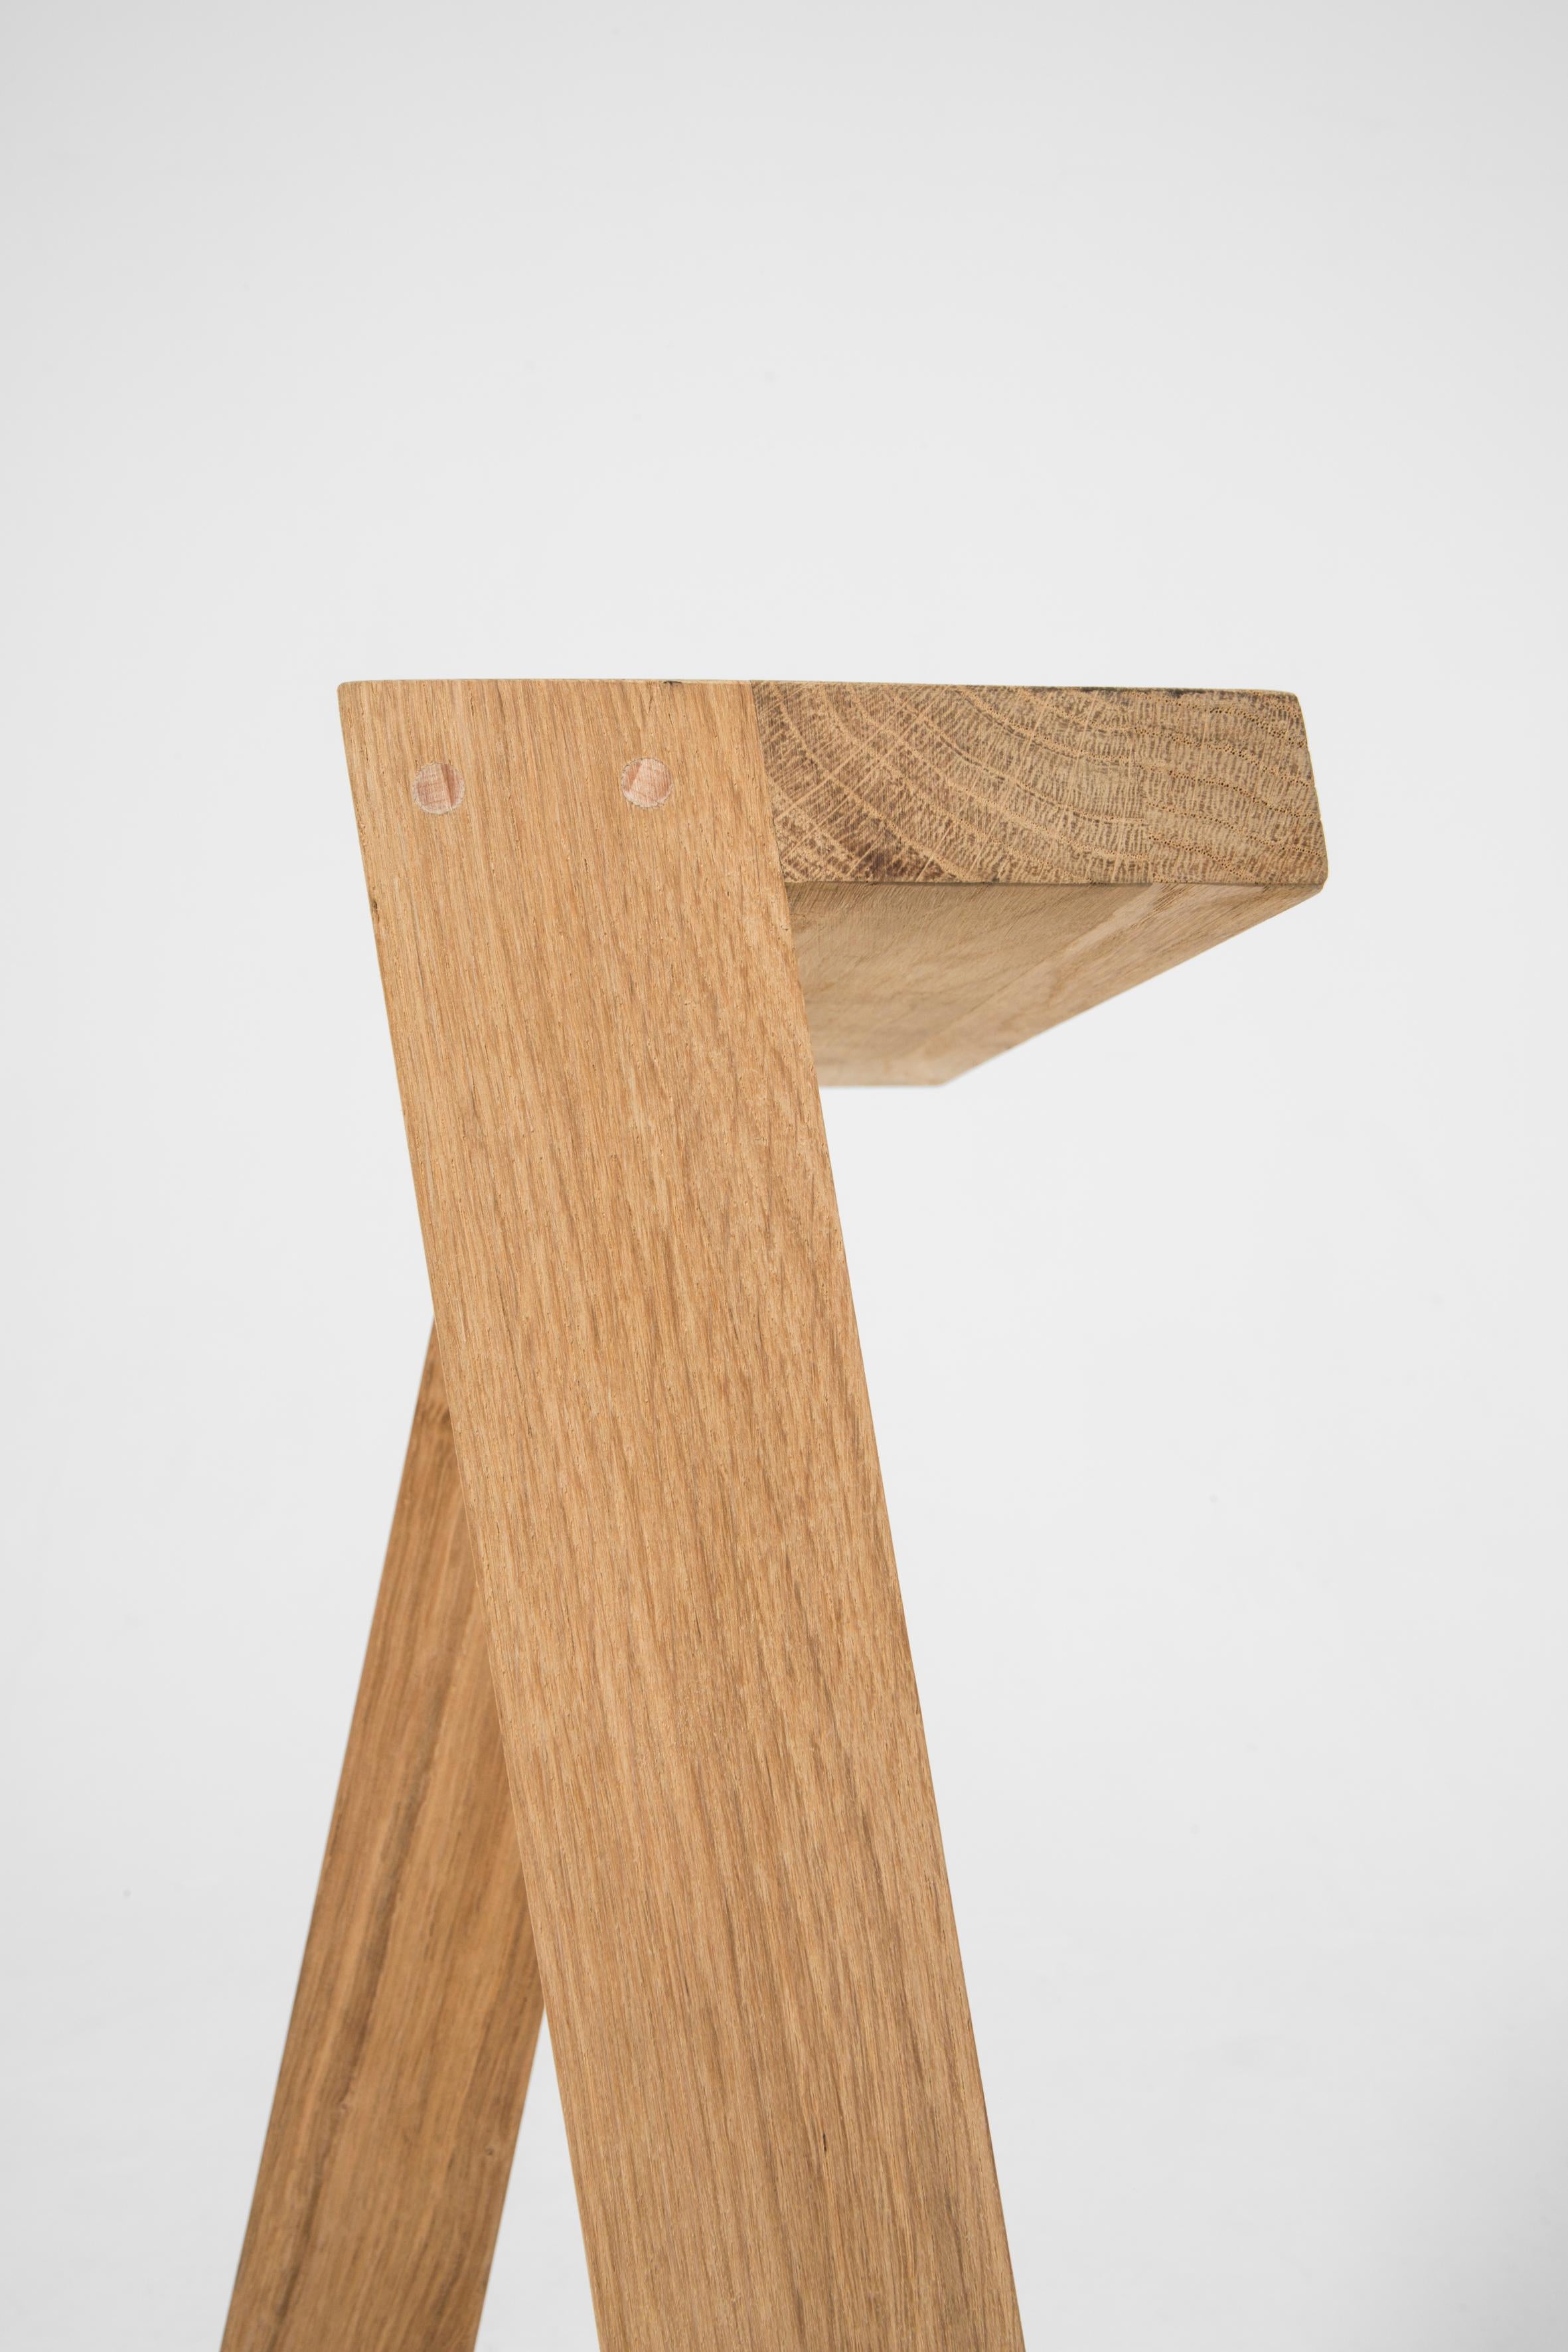 Medium Pausa Oak Stool by Pierre-Emmanuel Vandeputte In New Condition For Sale In Geneve, CH